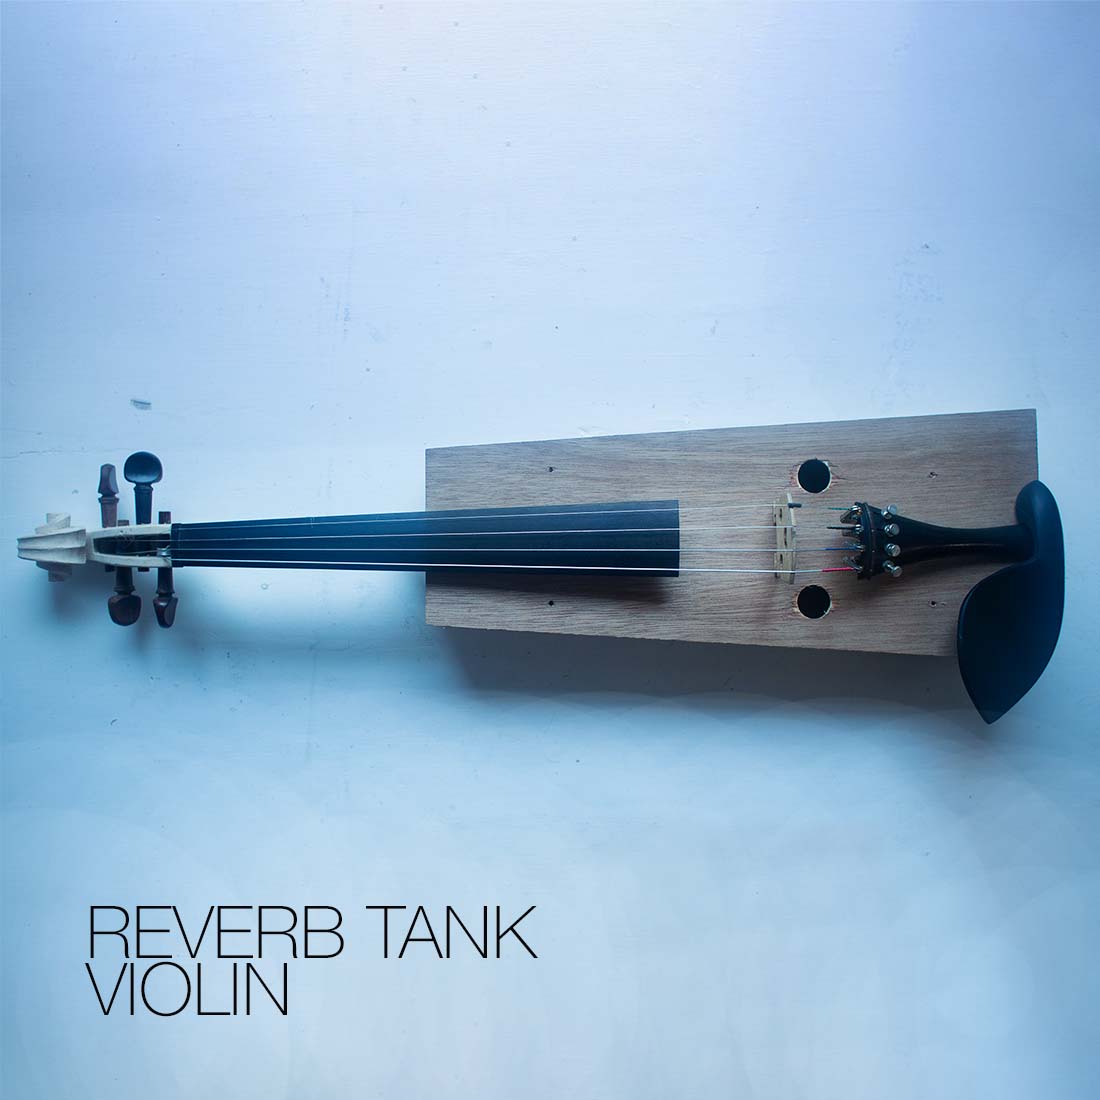 Reverb tank violin